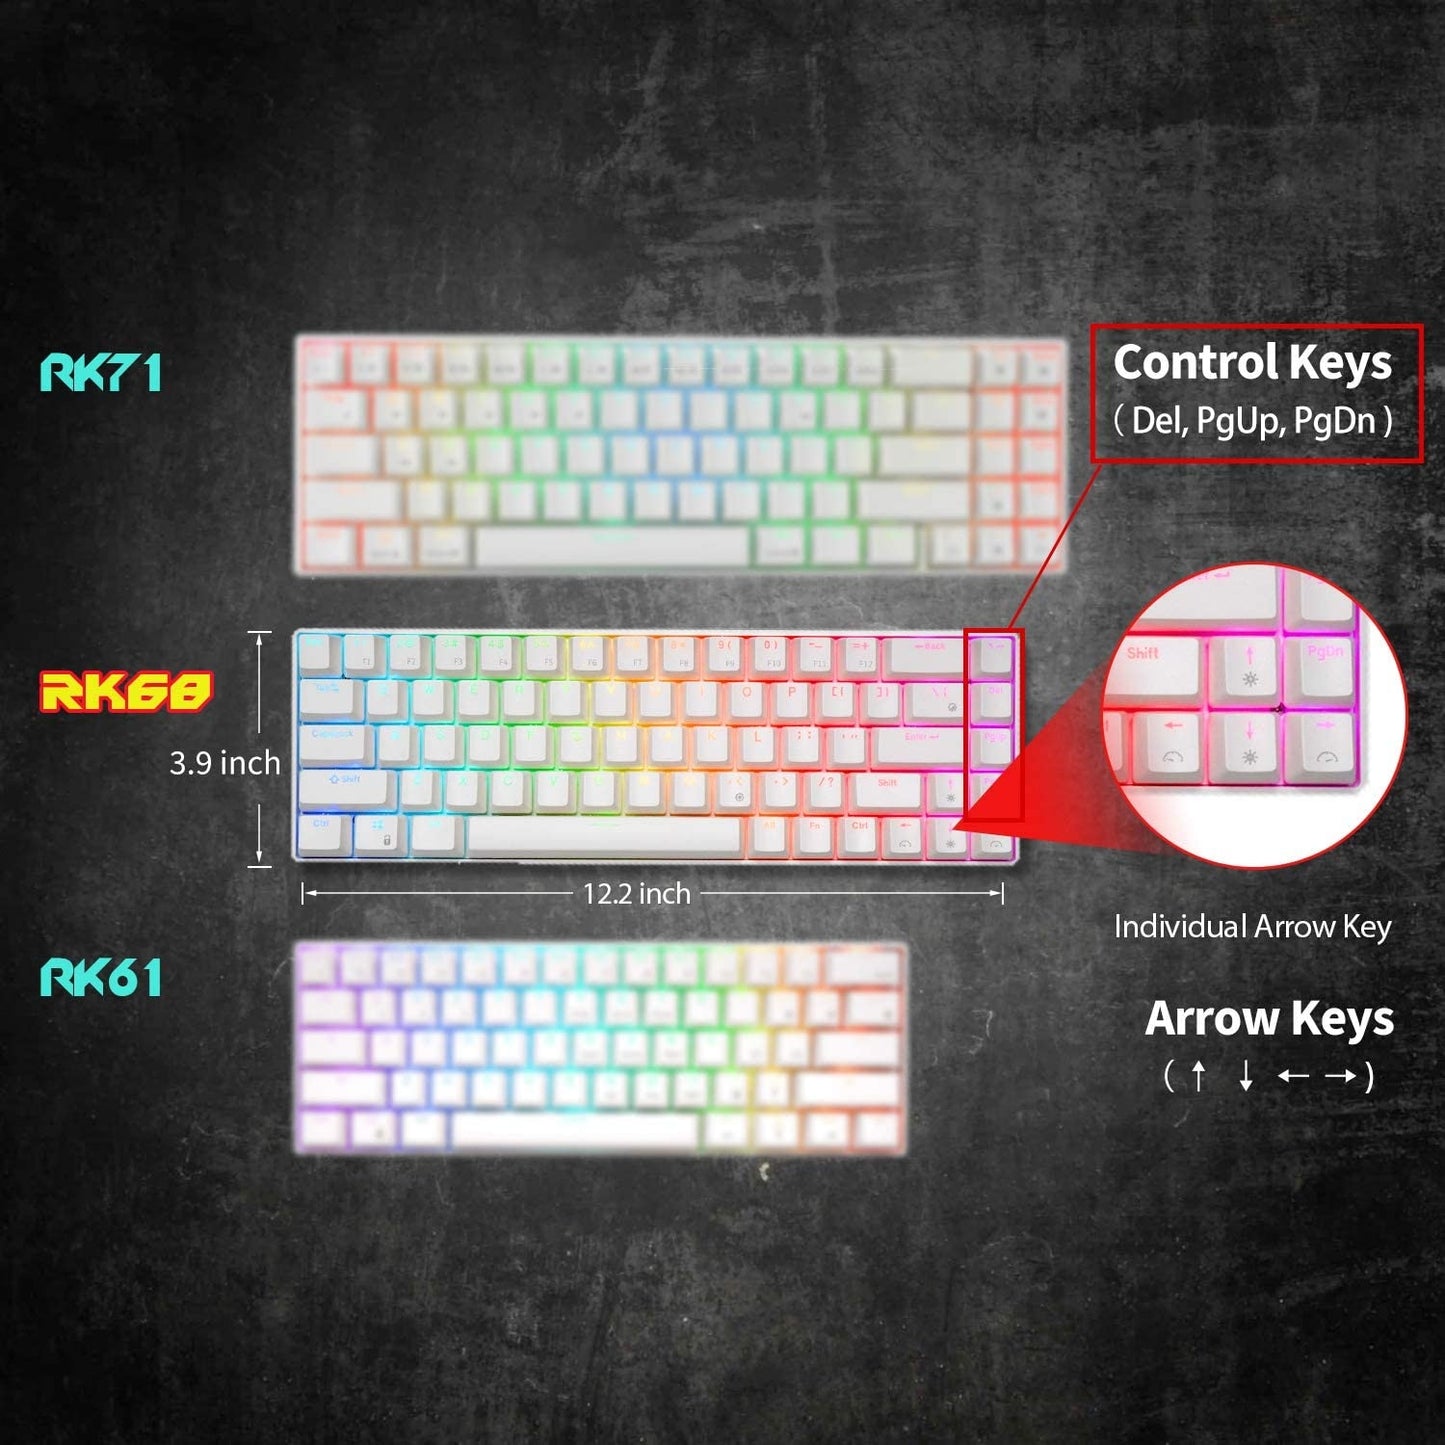 ROYAL KLUDGE RK G68 Wireless 65% Mechanical Keyboard